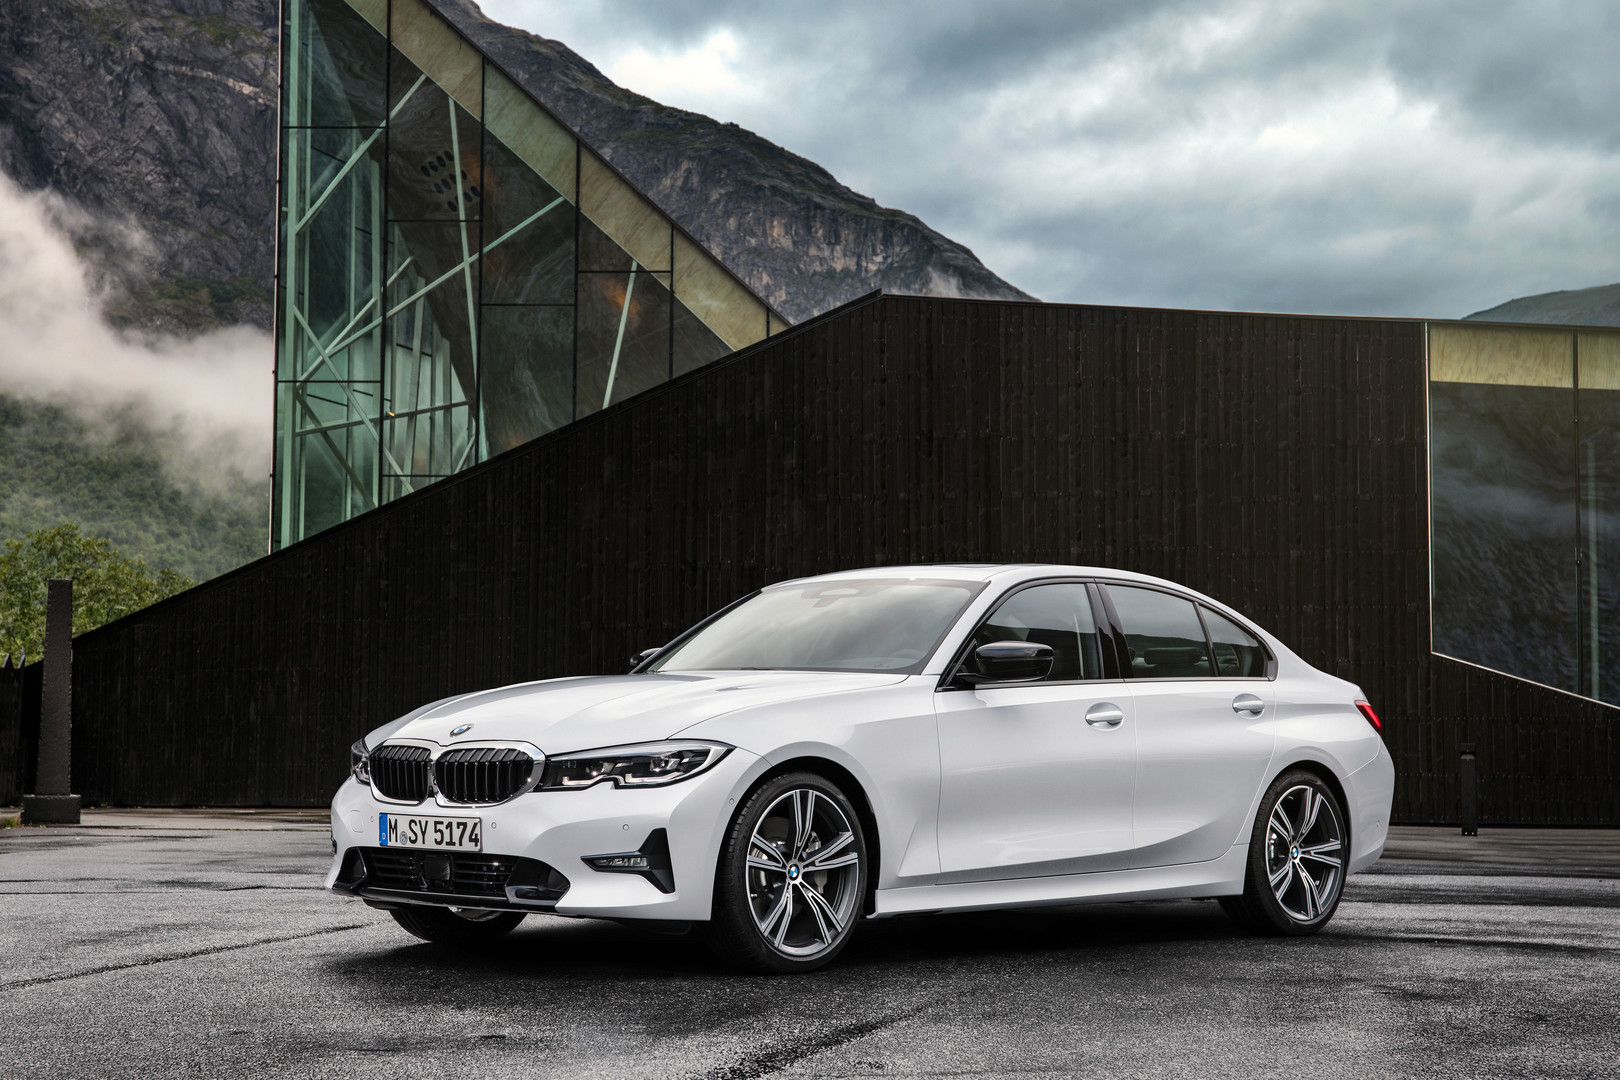 2019 BMW 3Series (G20) Officially Revealed GTspirit